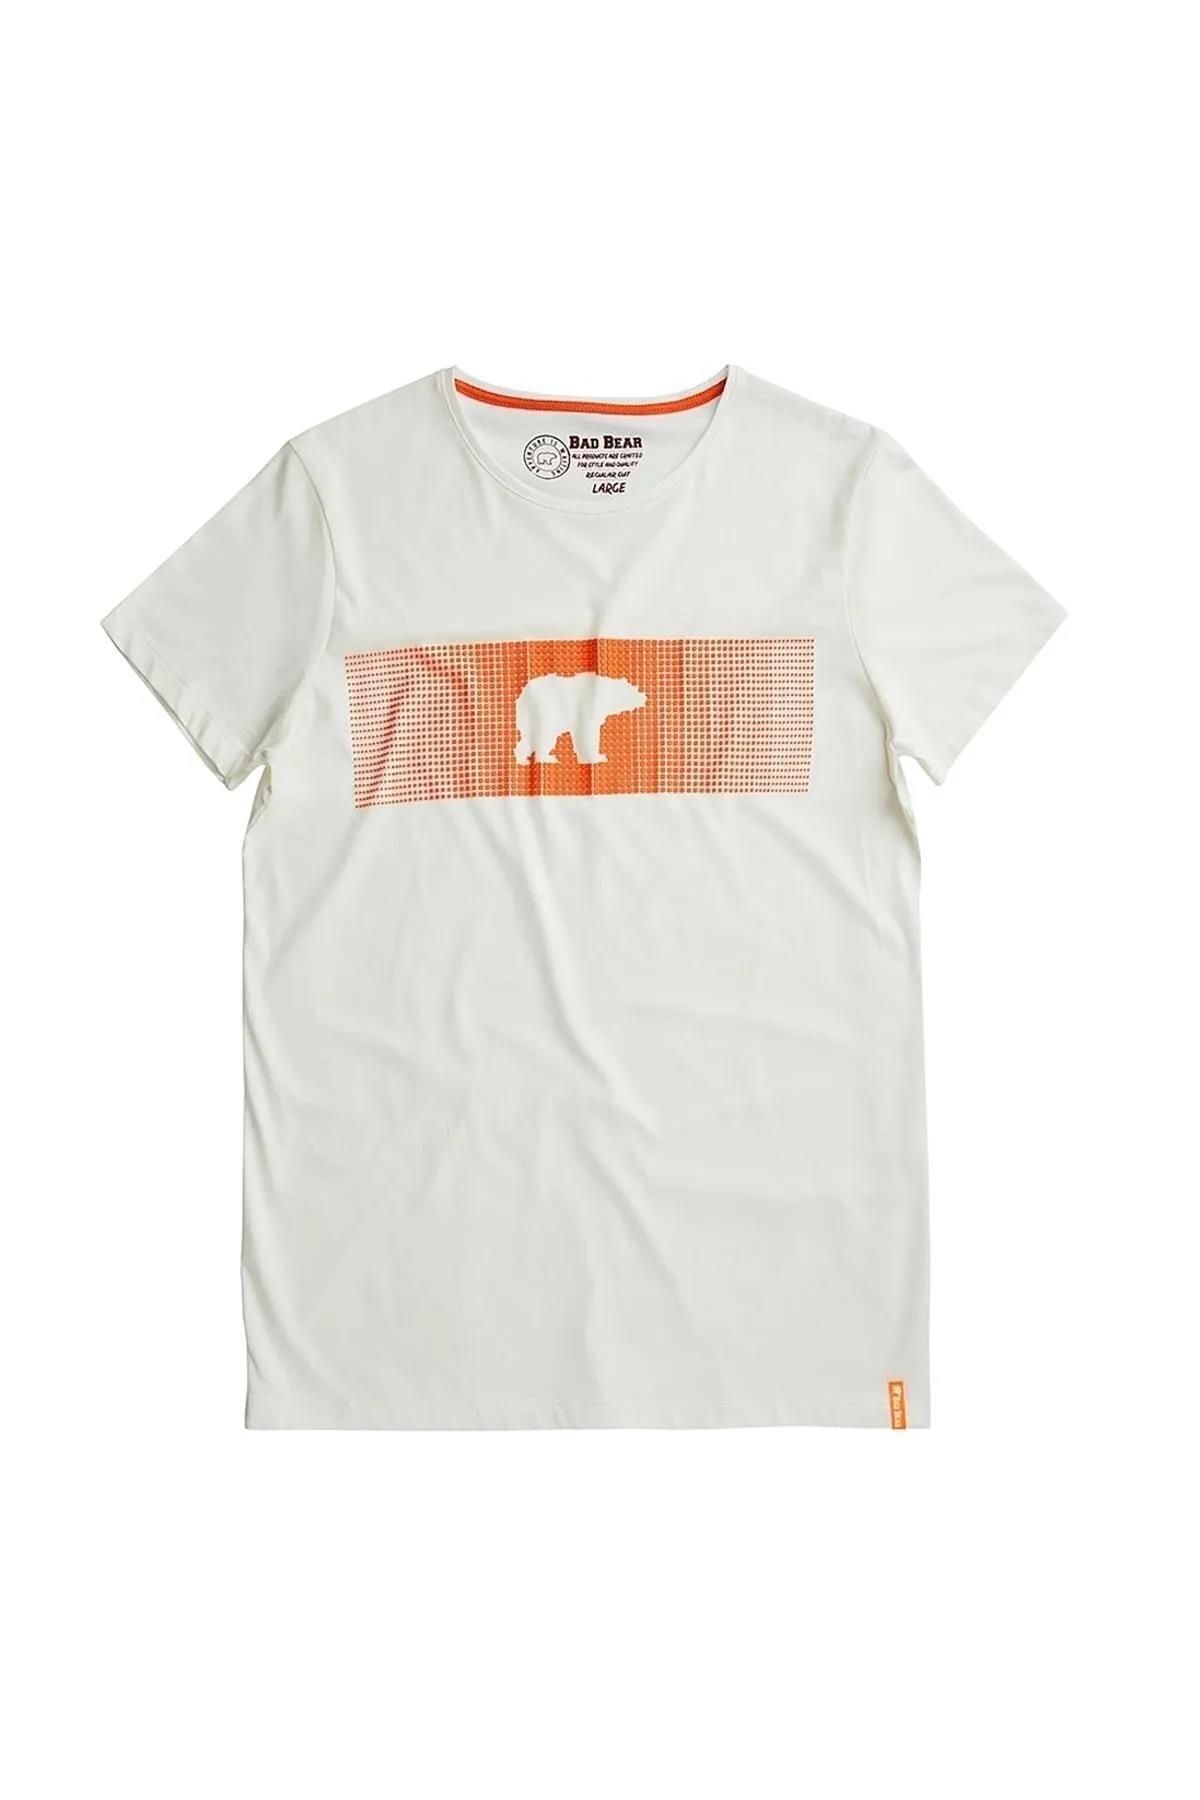 Bad Bear 20.01.07.024-b Fancy Tee Unisex T-shirt